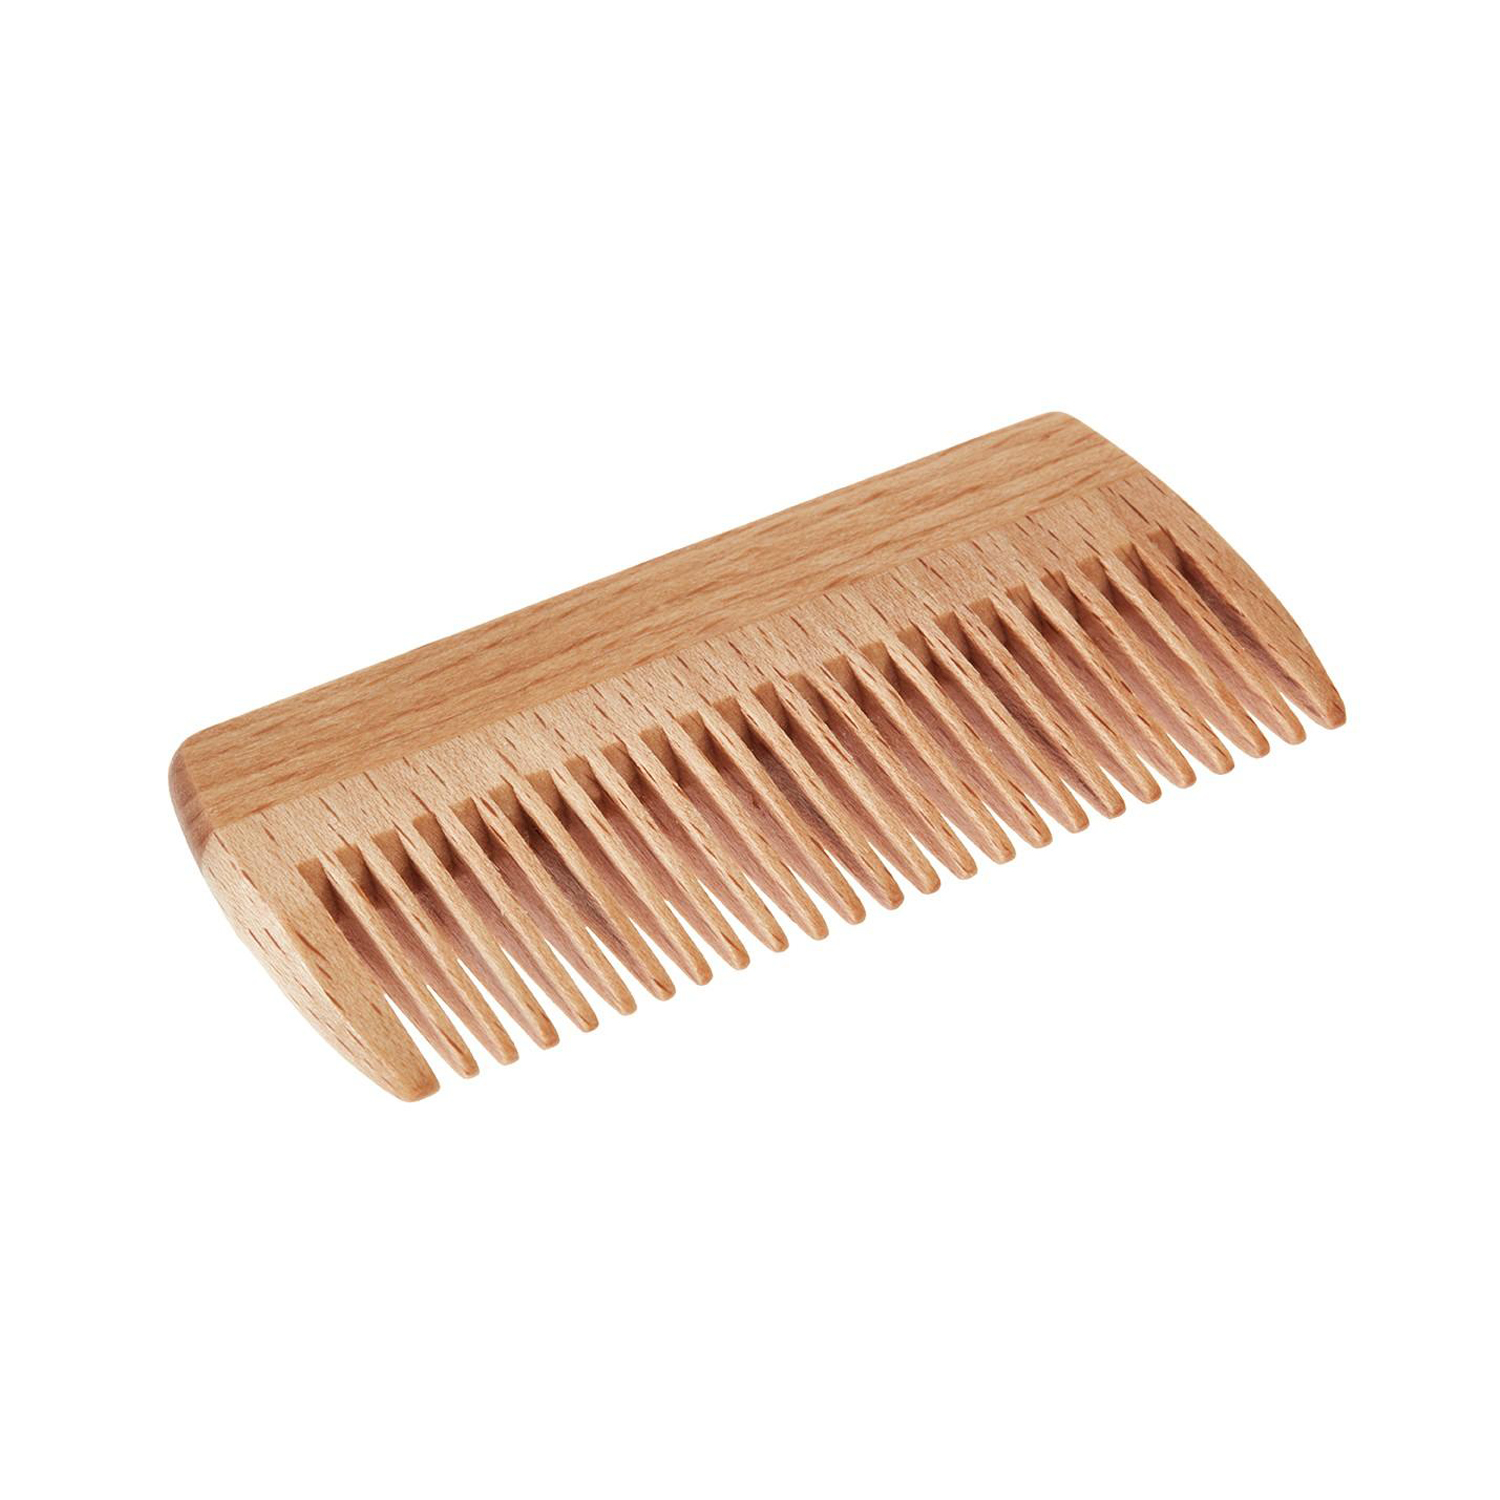 KELLER 624 22 00 beard comb - wooden